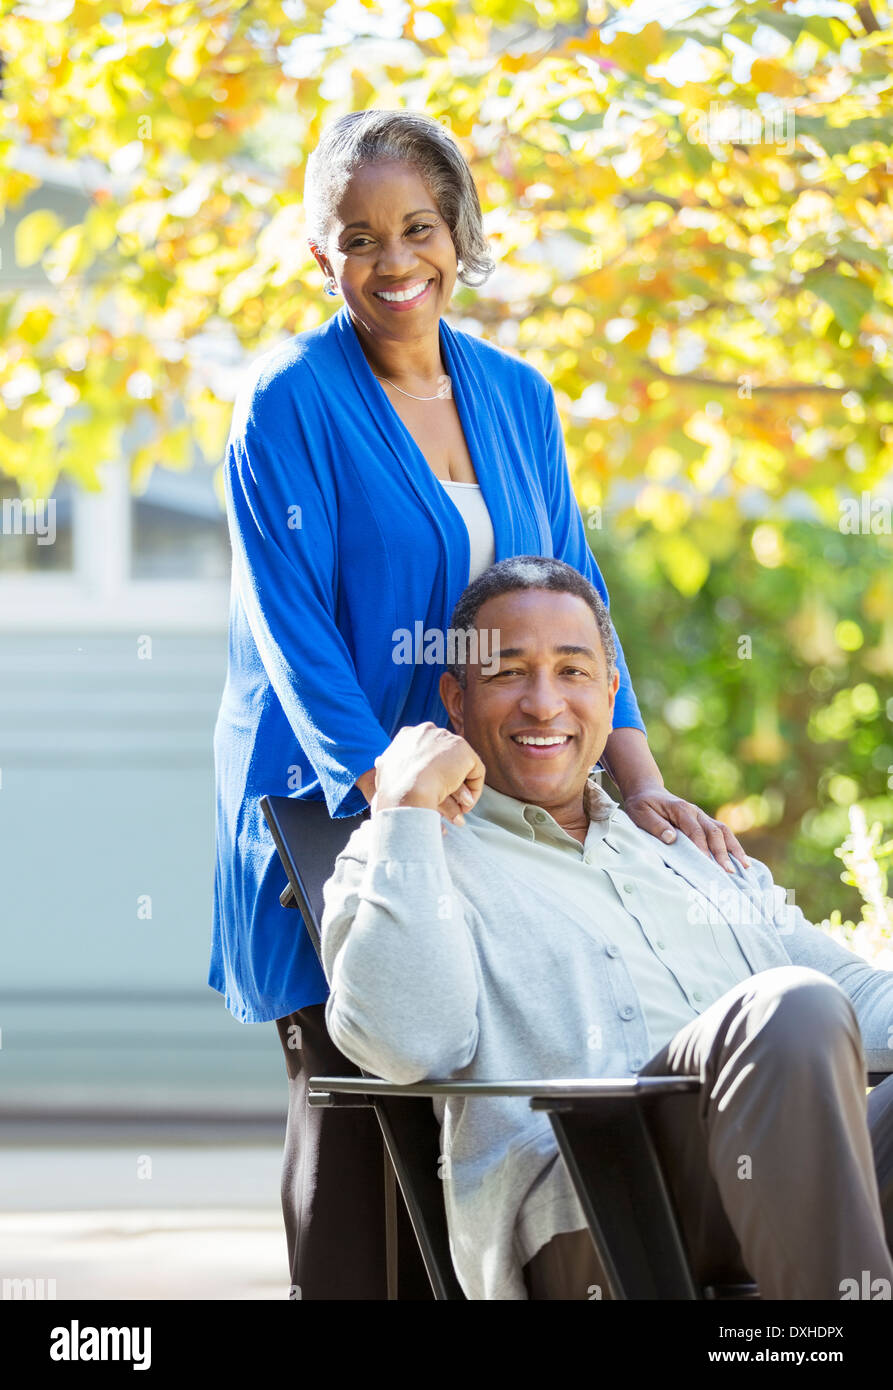 Portrait of smiling senior couple outdoors Stock Photo